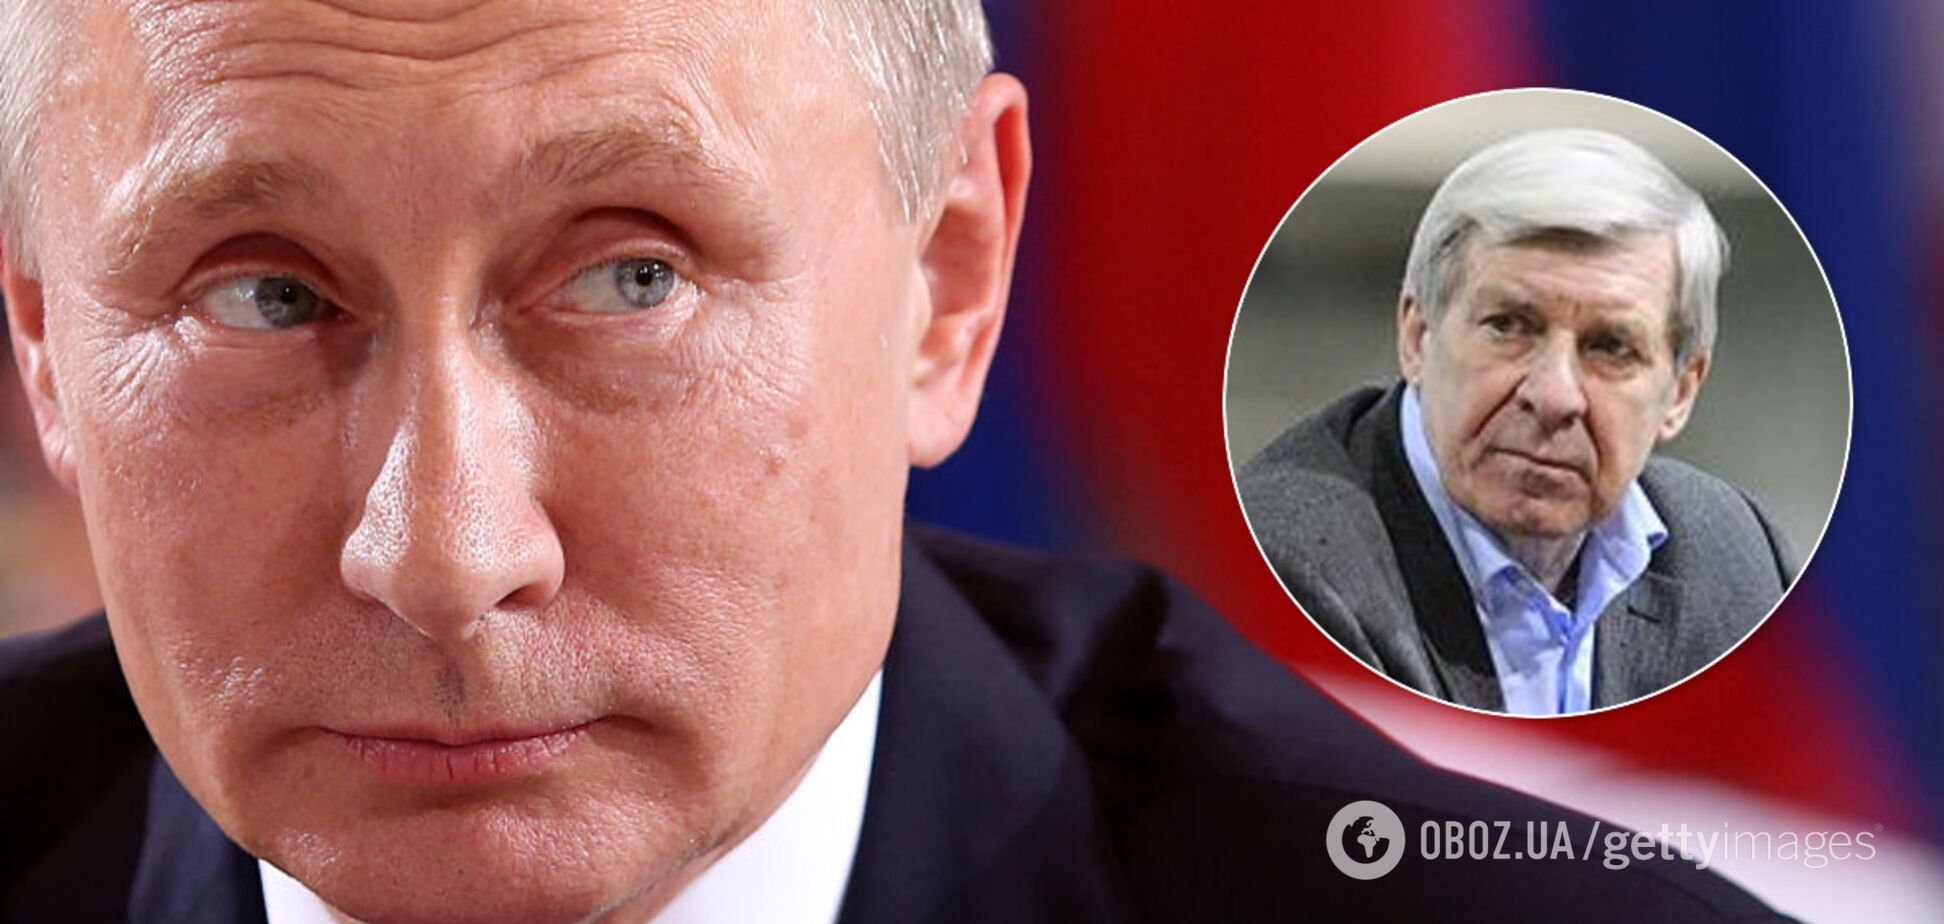 Ветеран ЦСКА Пономарев наехал на Путина из-за коронавируса